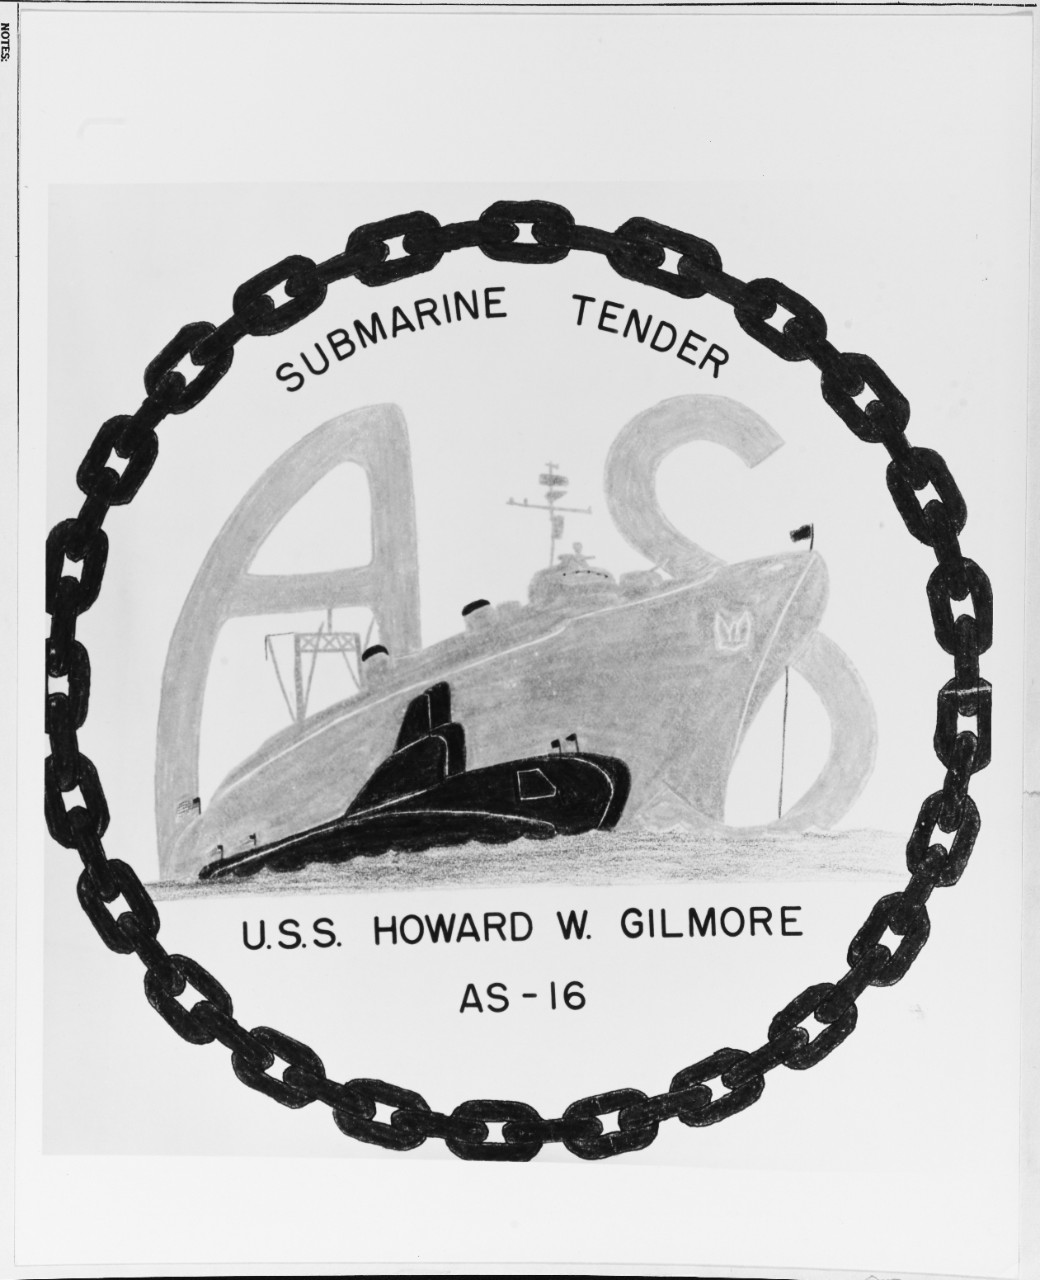 Insignia: USS HOWARD W. GILMORE (AS-16)